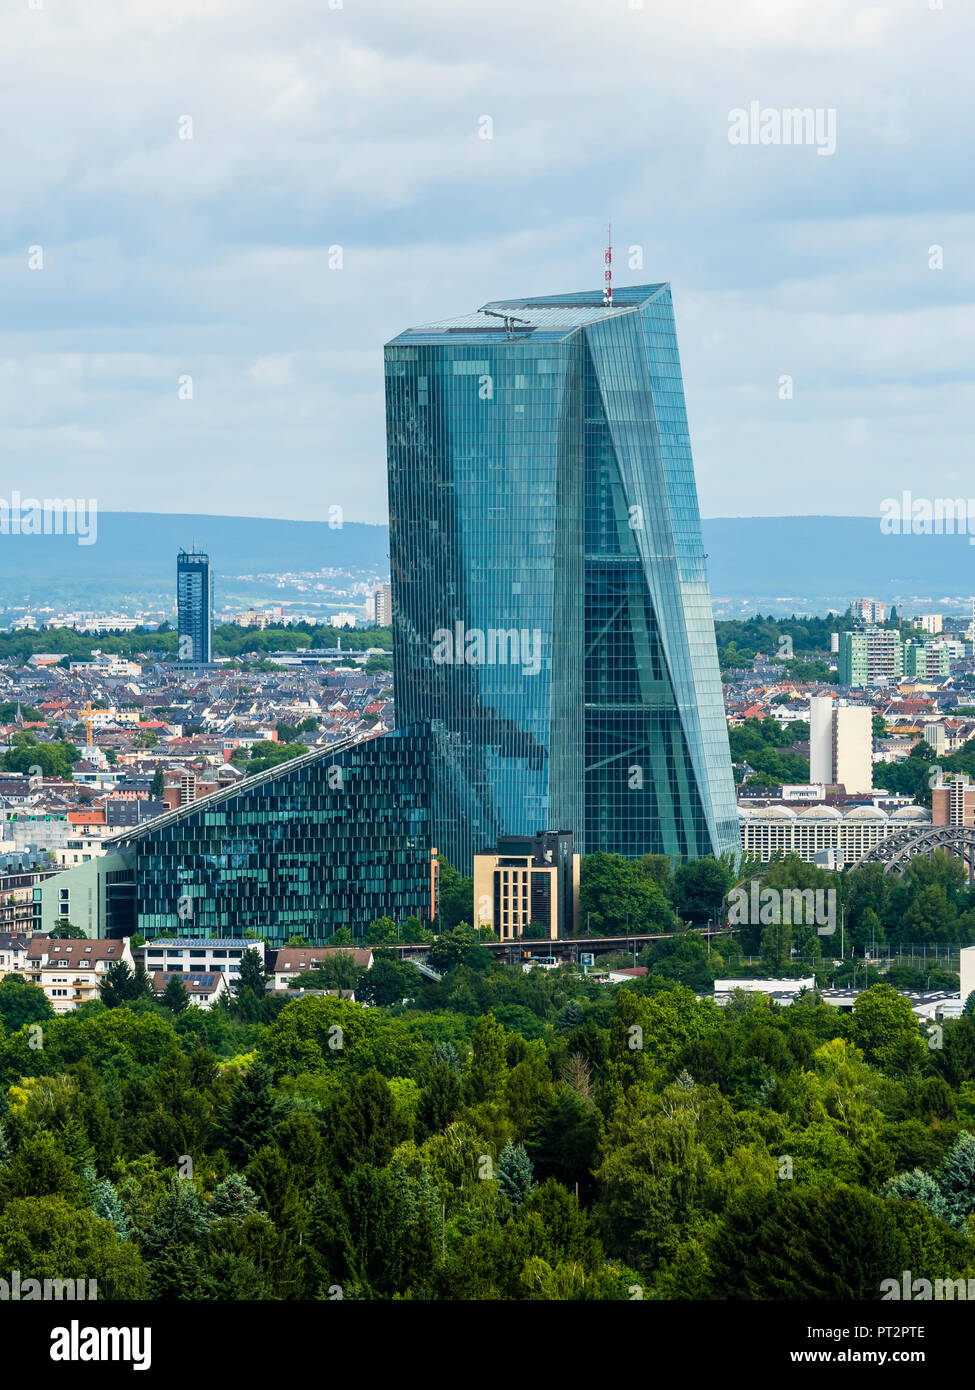 Germania, Francoforte, vista della Banca centrale europea Foto Stock